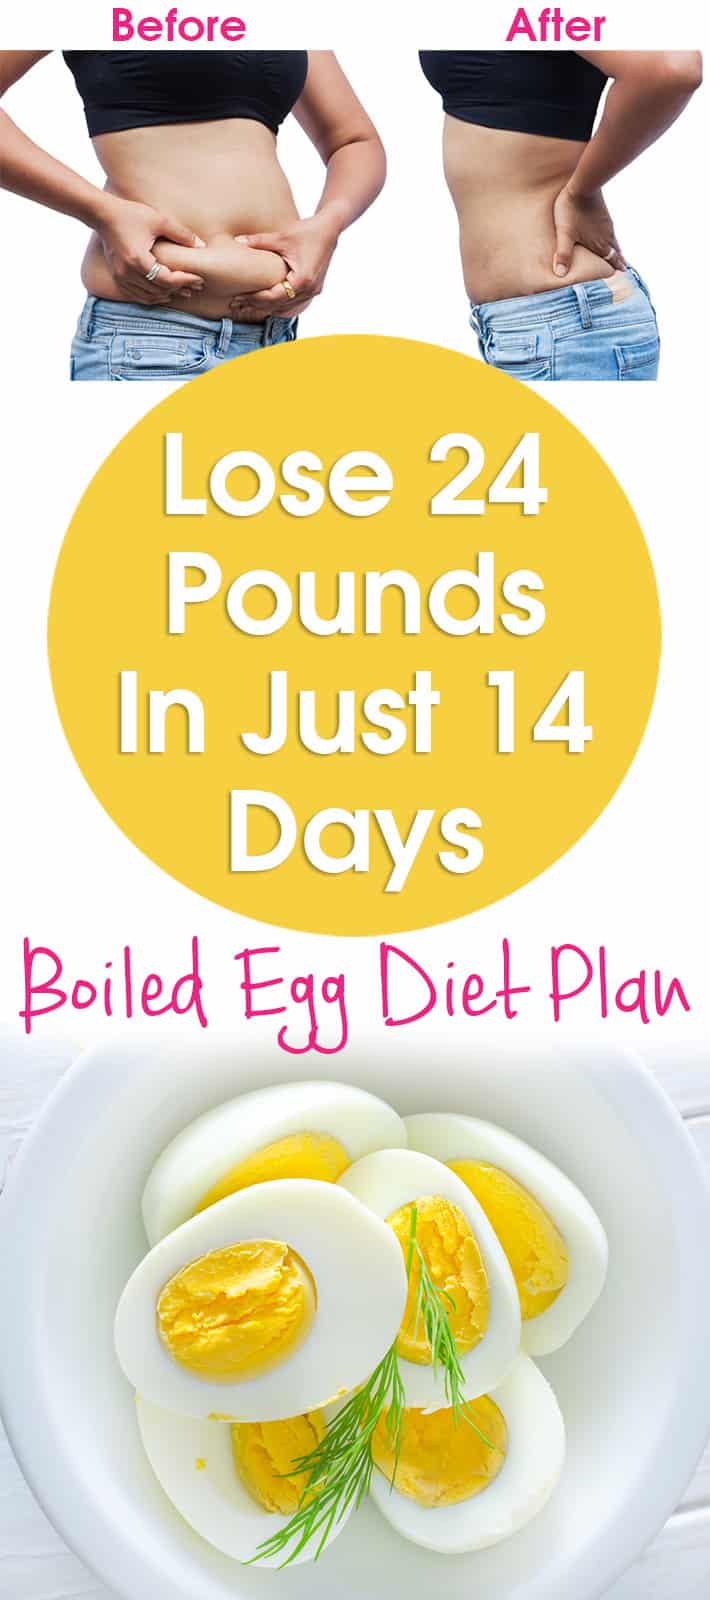 Flat Stomach Egg Diet Plan